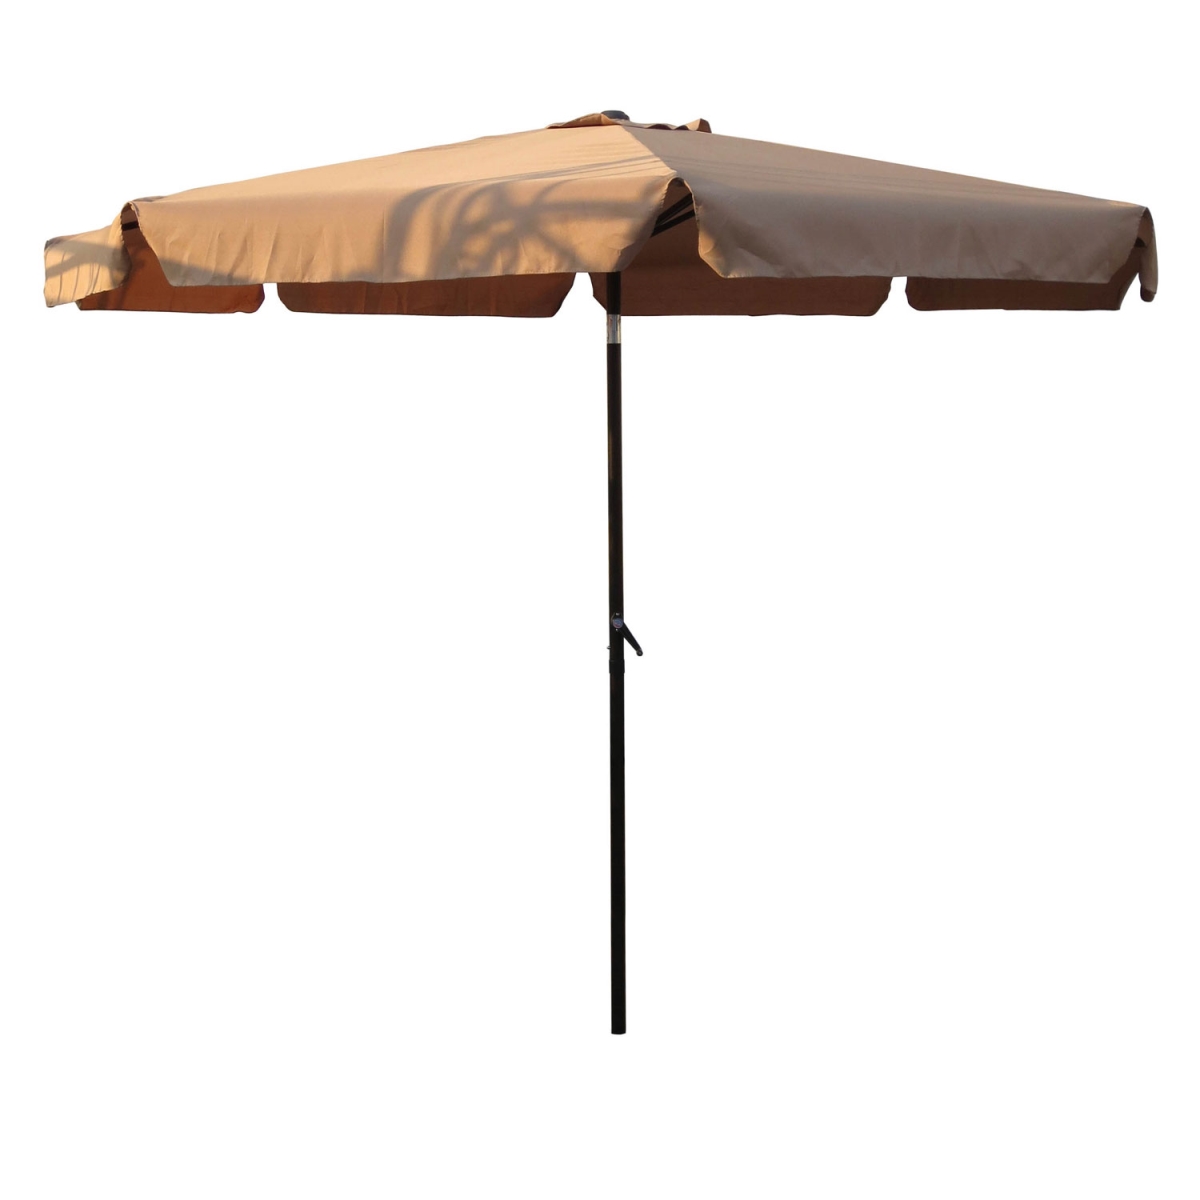 Yf-1104-3m-kh 10 Ft. Outdoor Aluminum Umbrella With Flaps, Khaki